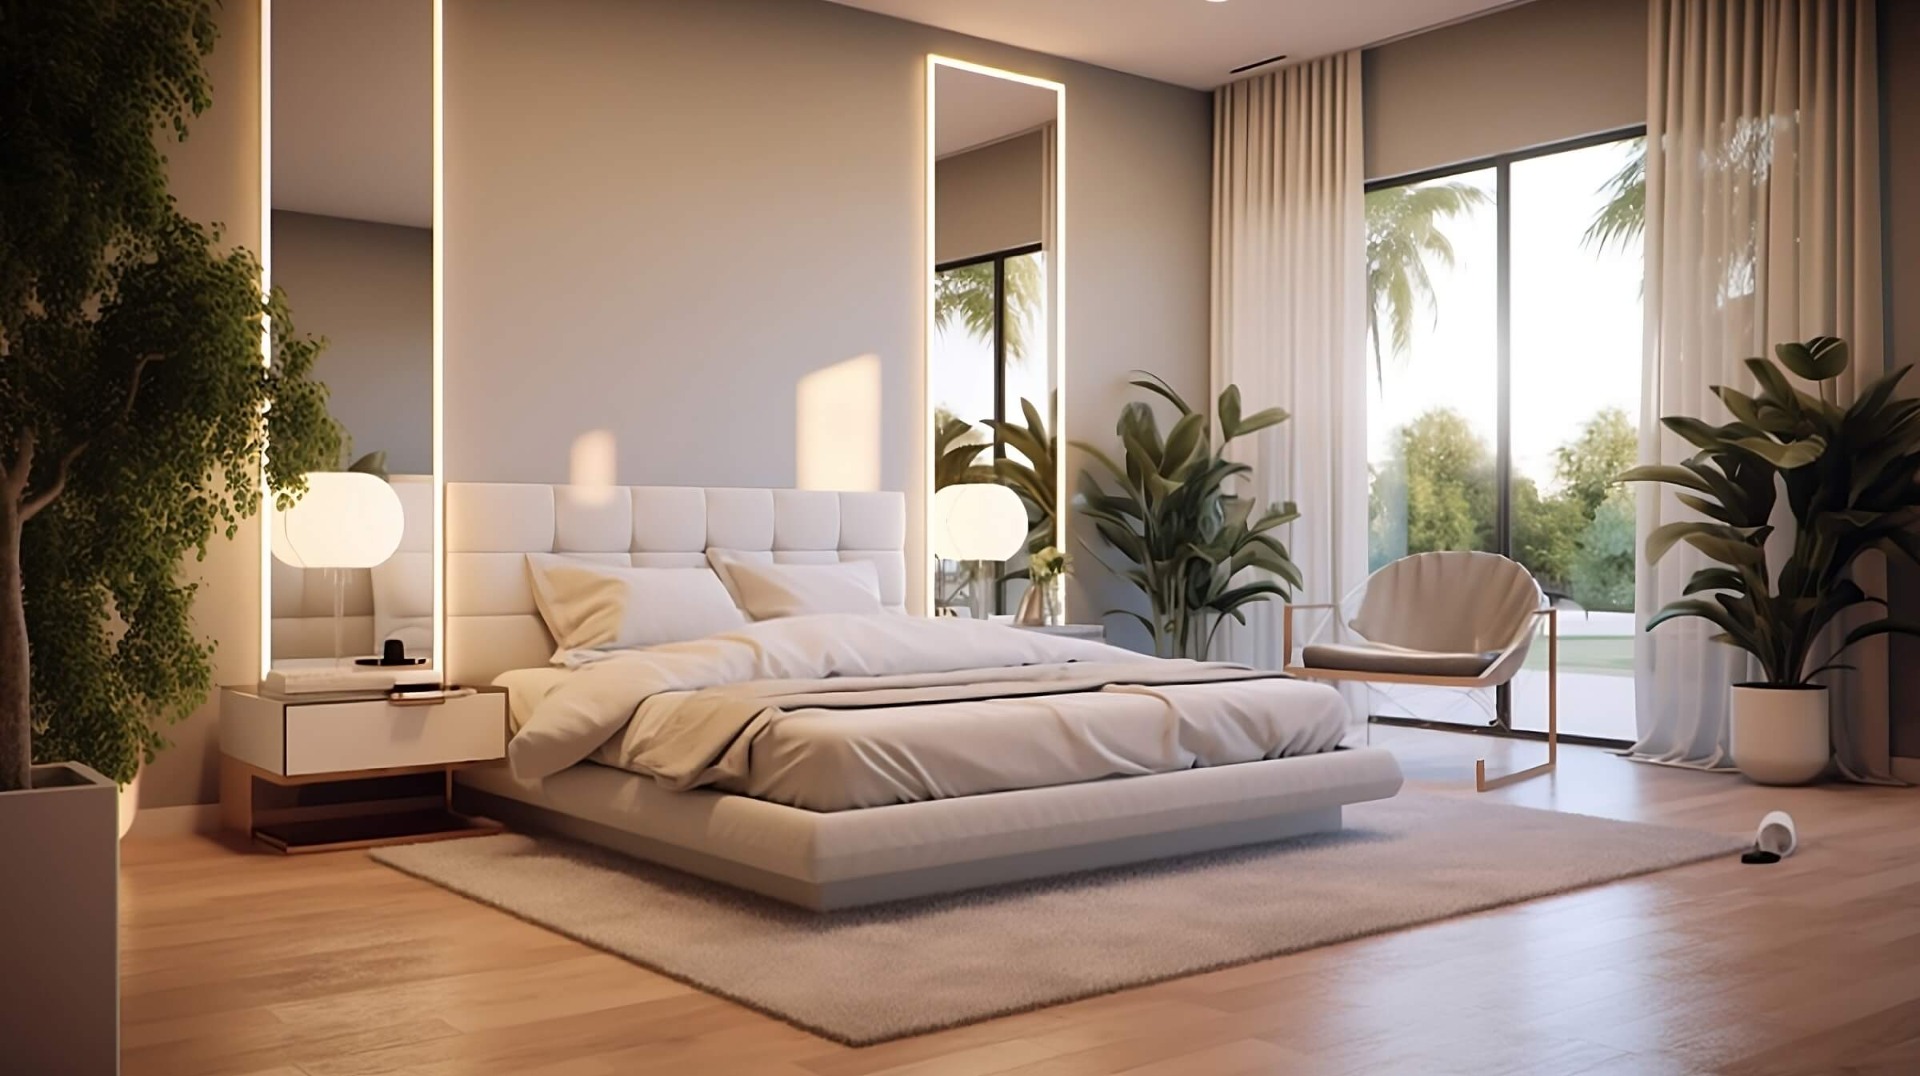 Hestya-affordable-couple-bedroom-interior-design